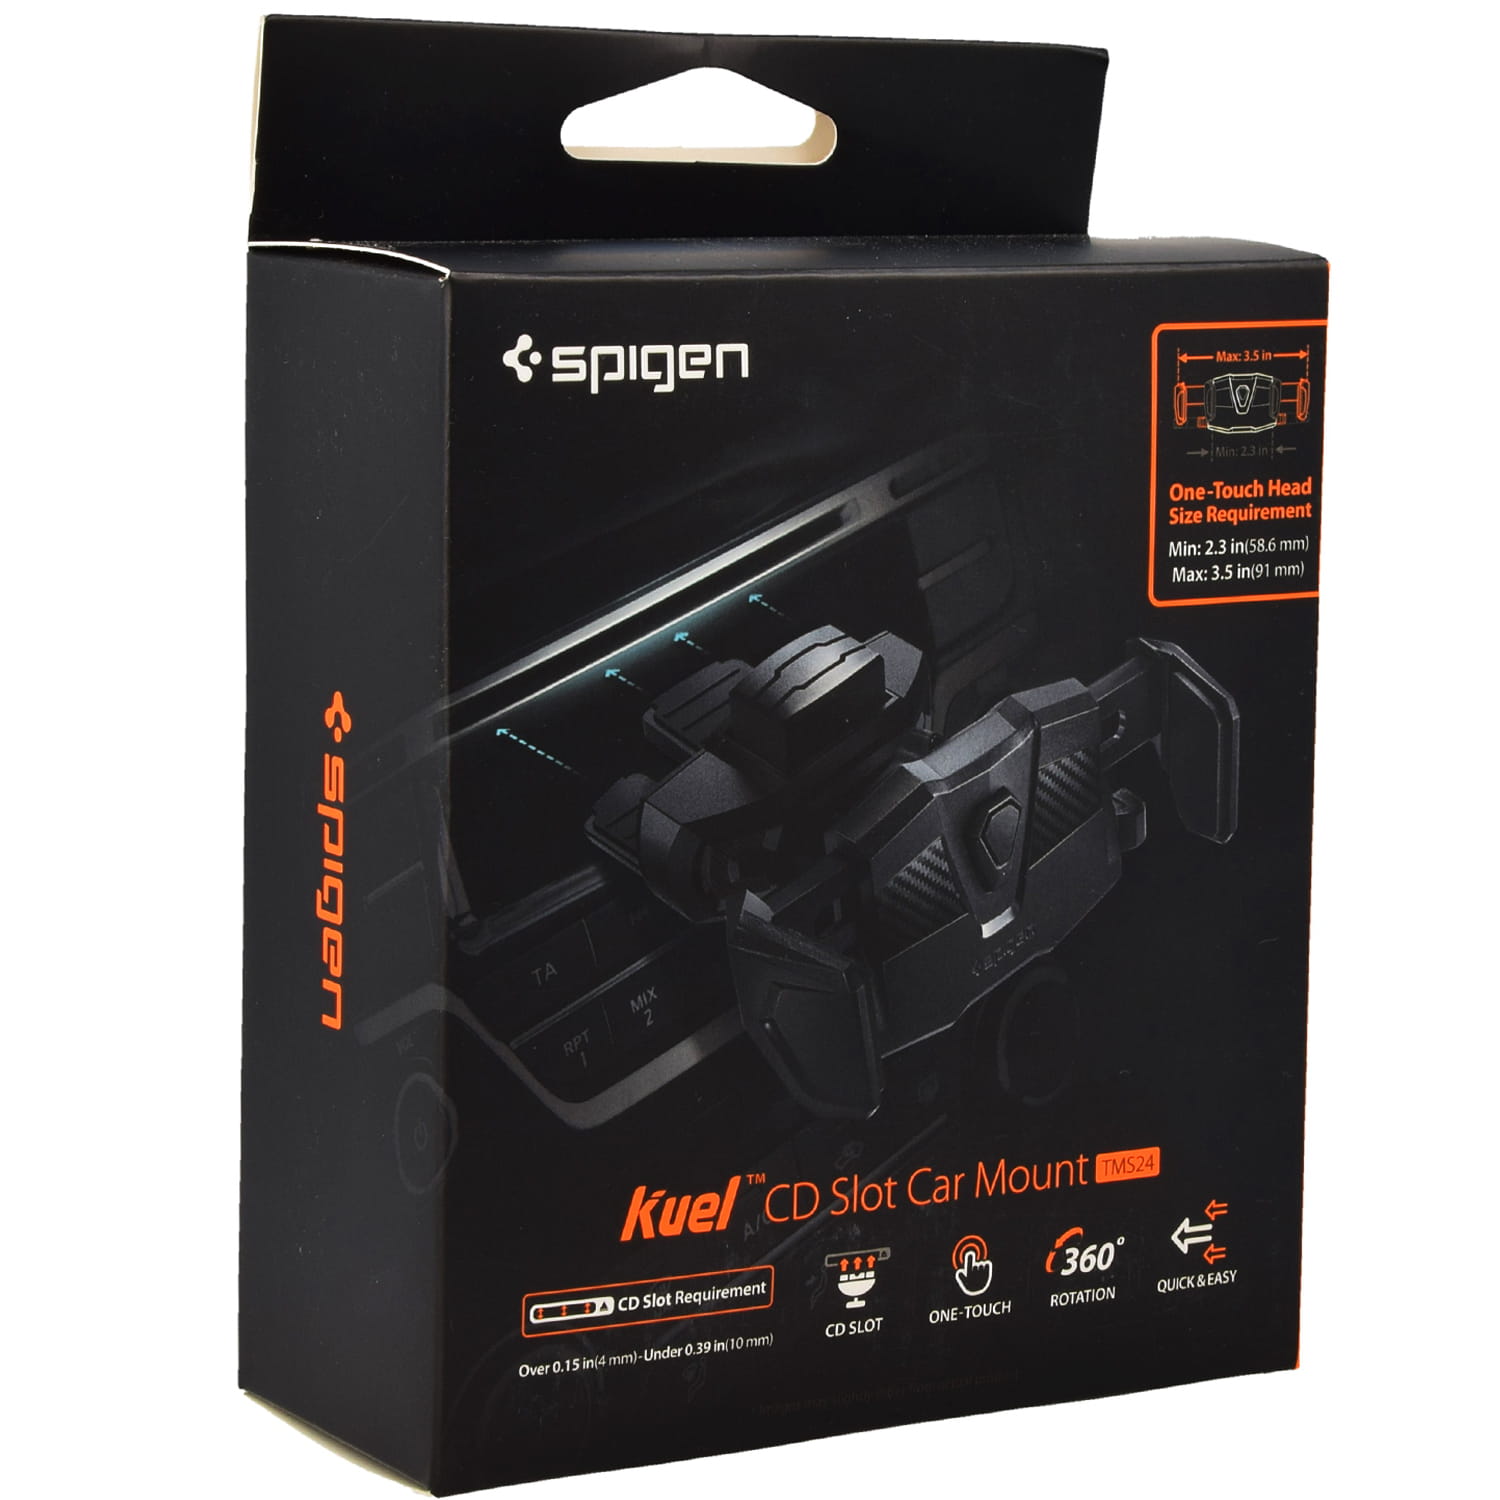 Auto Handyhalterung Spigen Kuel Car Mount CD Slot Type TMS24 (58.6-91mm), Schwarz